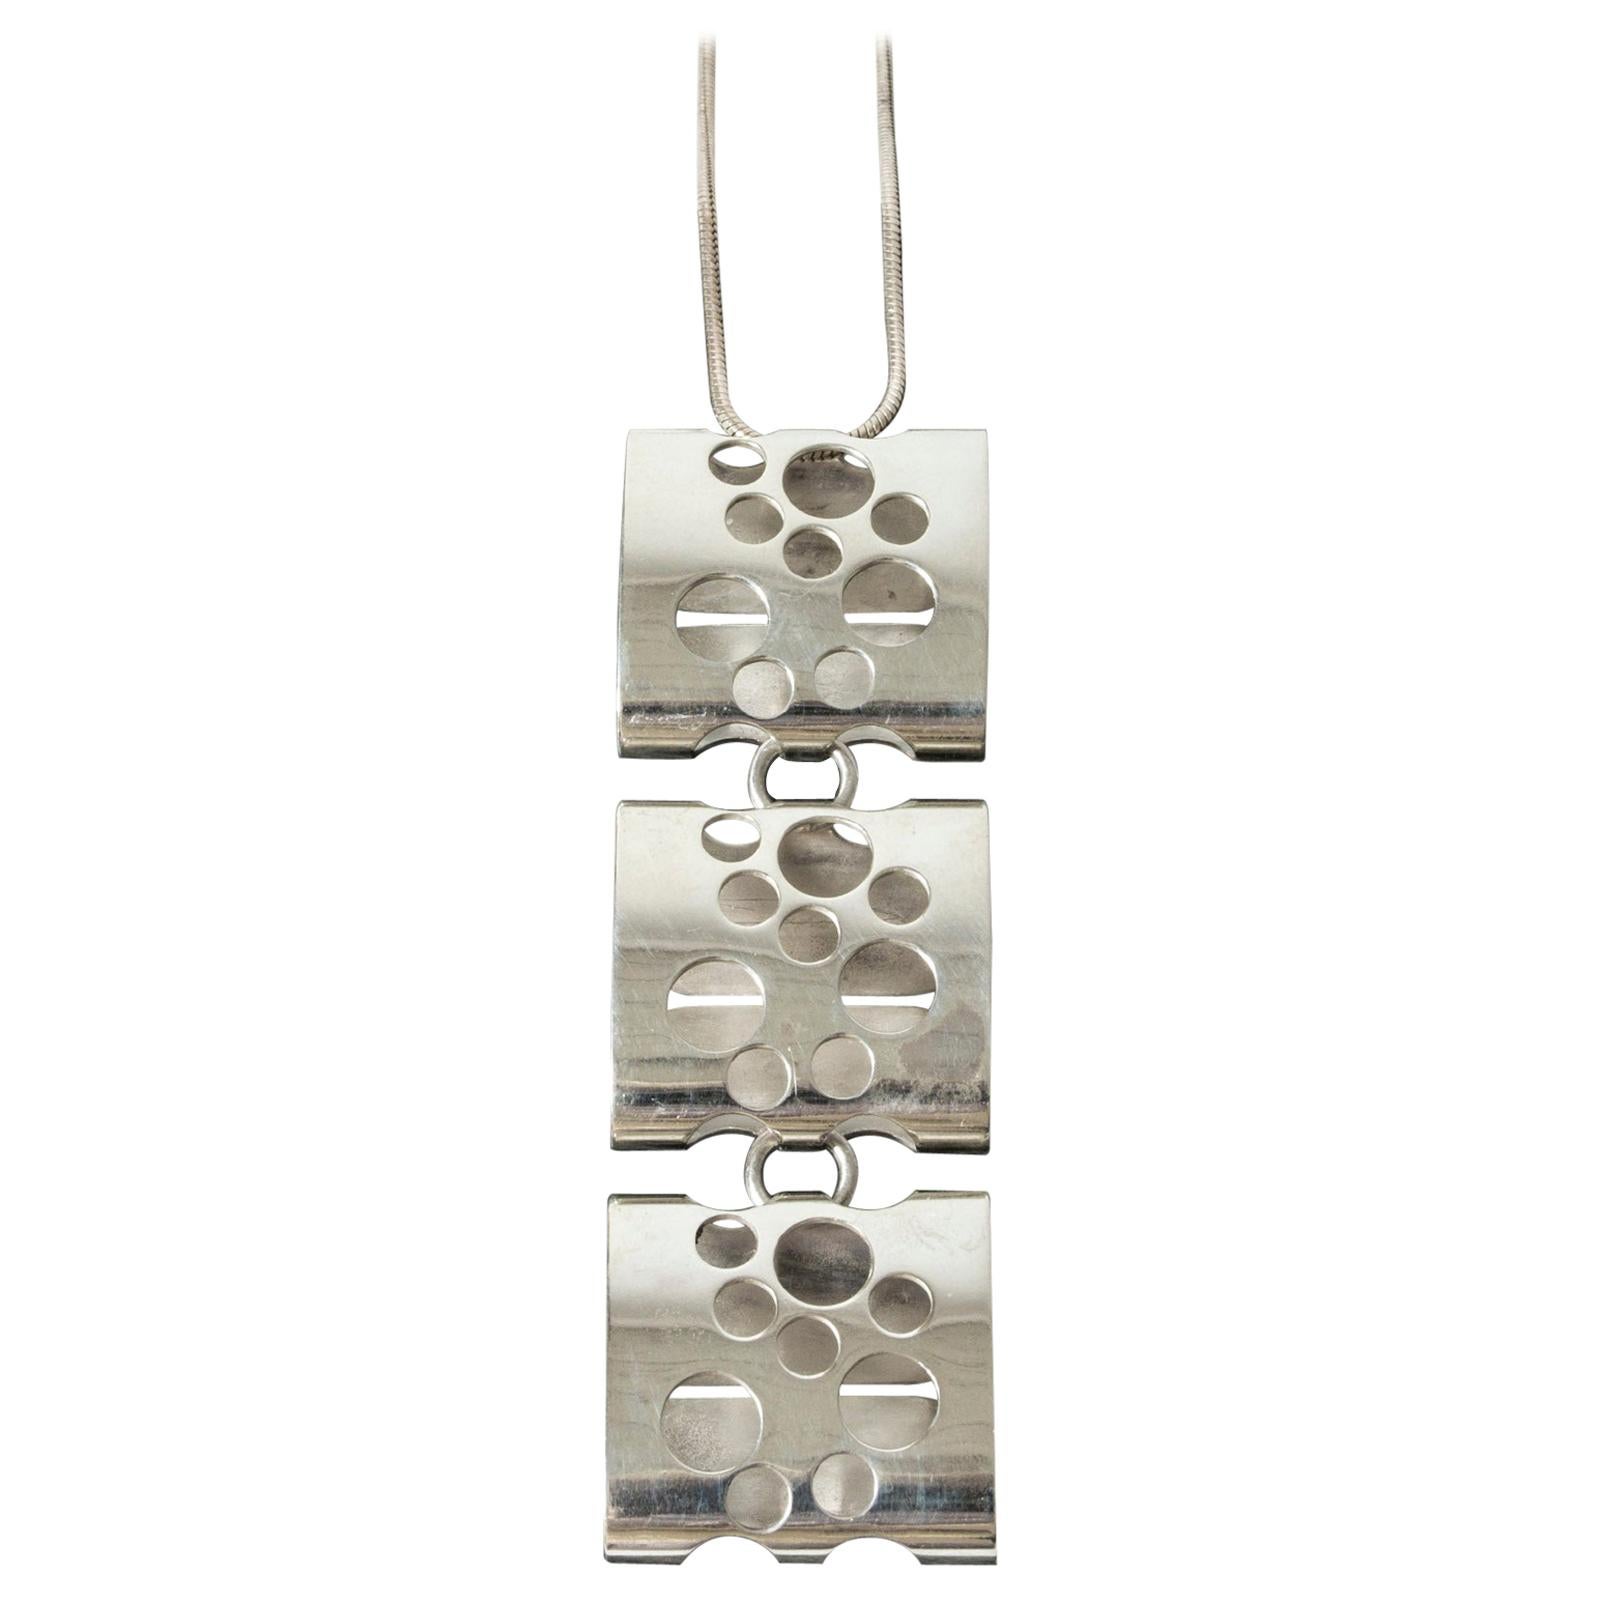 Kinetic Silver Necklace by Elis Kauppi for Kupittan Kulta, Finland, 1960s